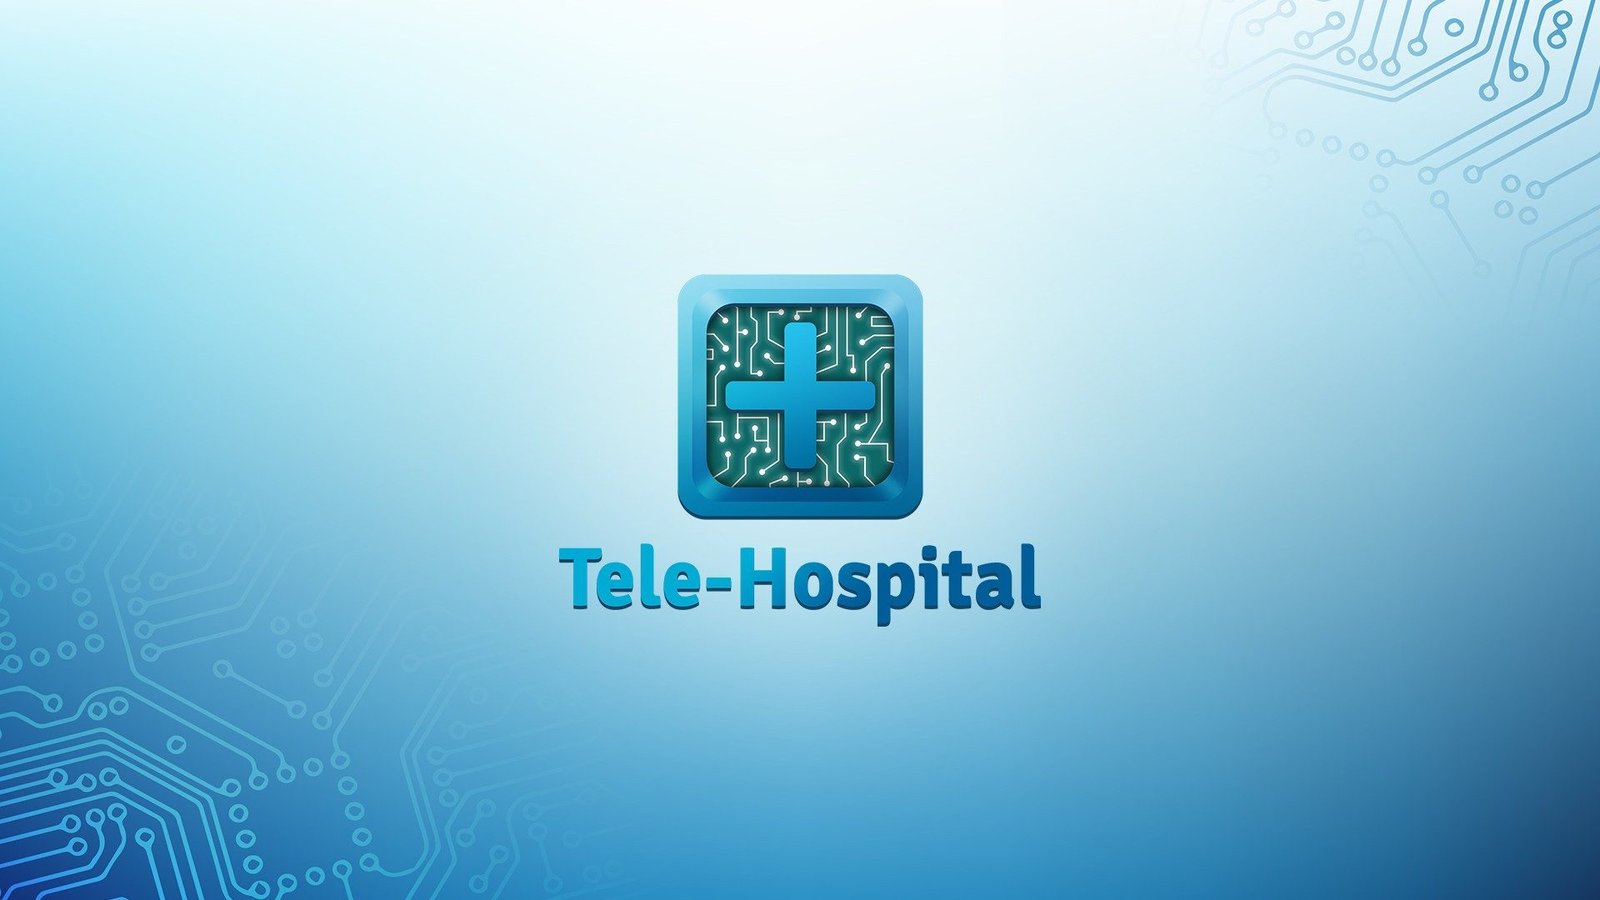 logo tele-hospital sur fond bleu